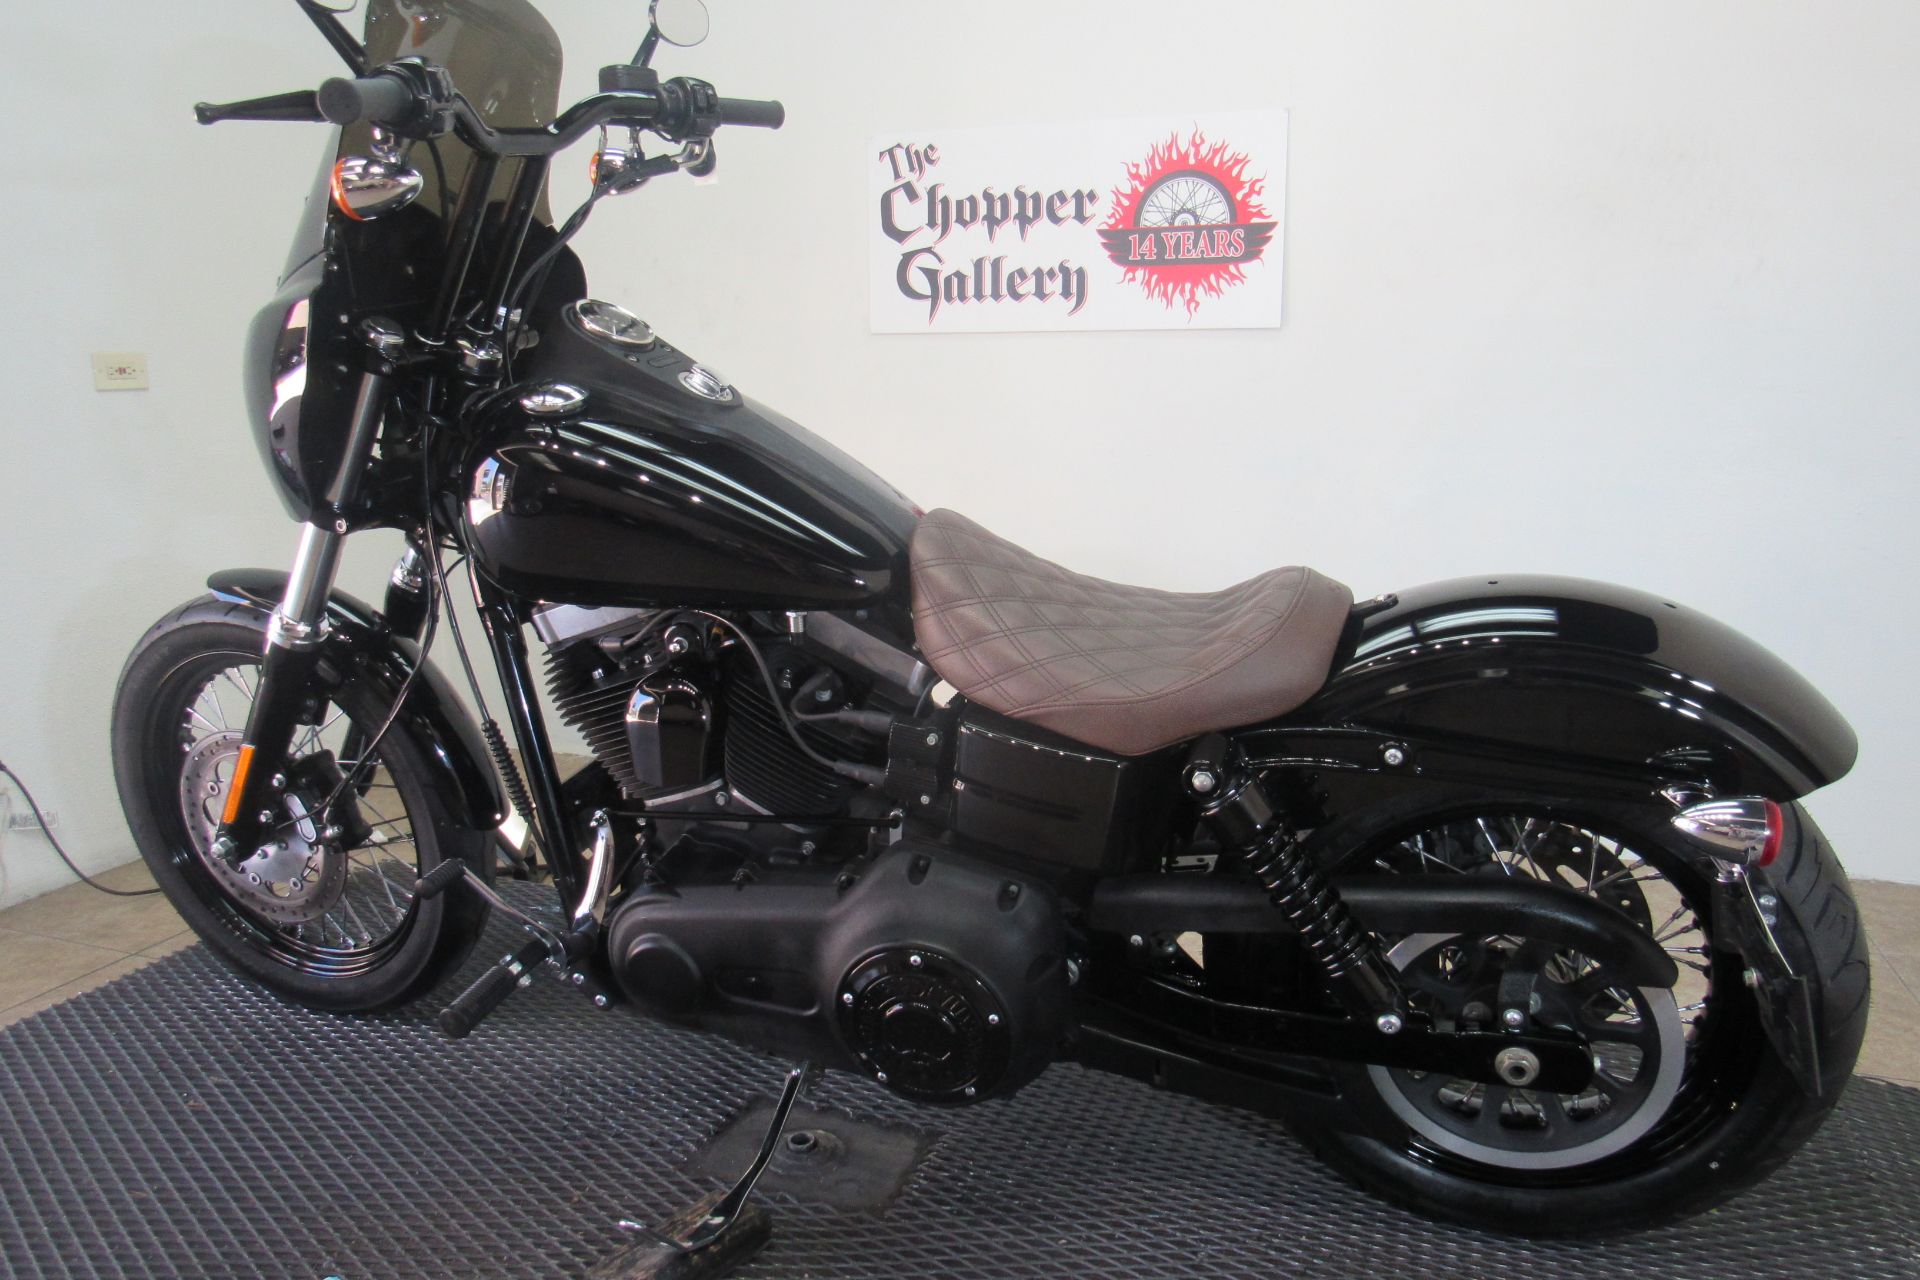 2014 Harley-Davidson Dyna® Street Bob® in Temecula, California - Photo 3